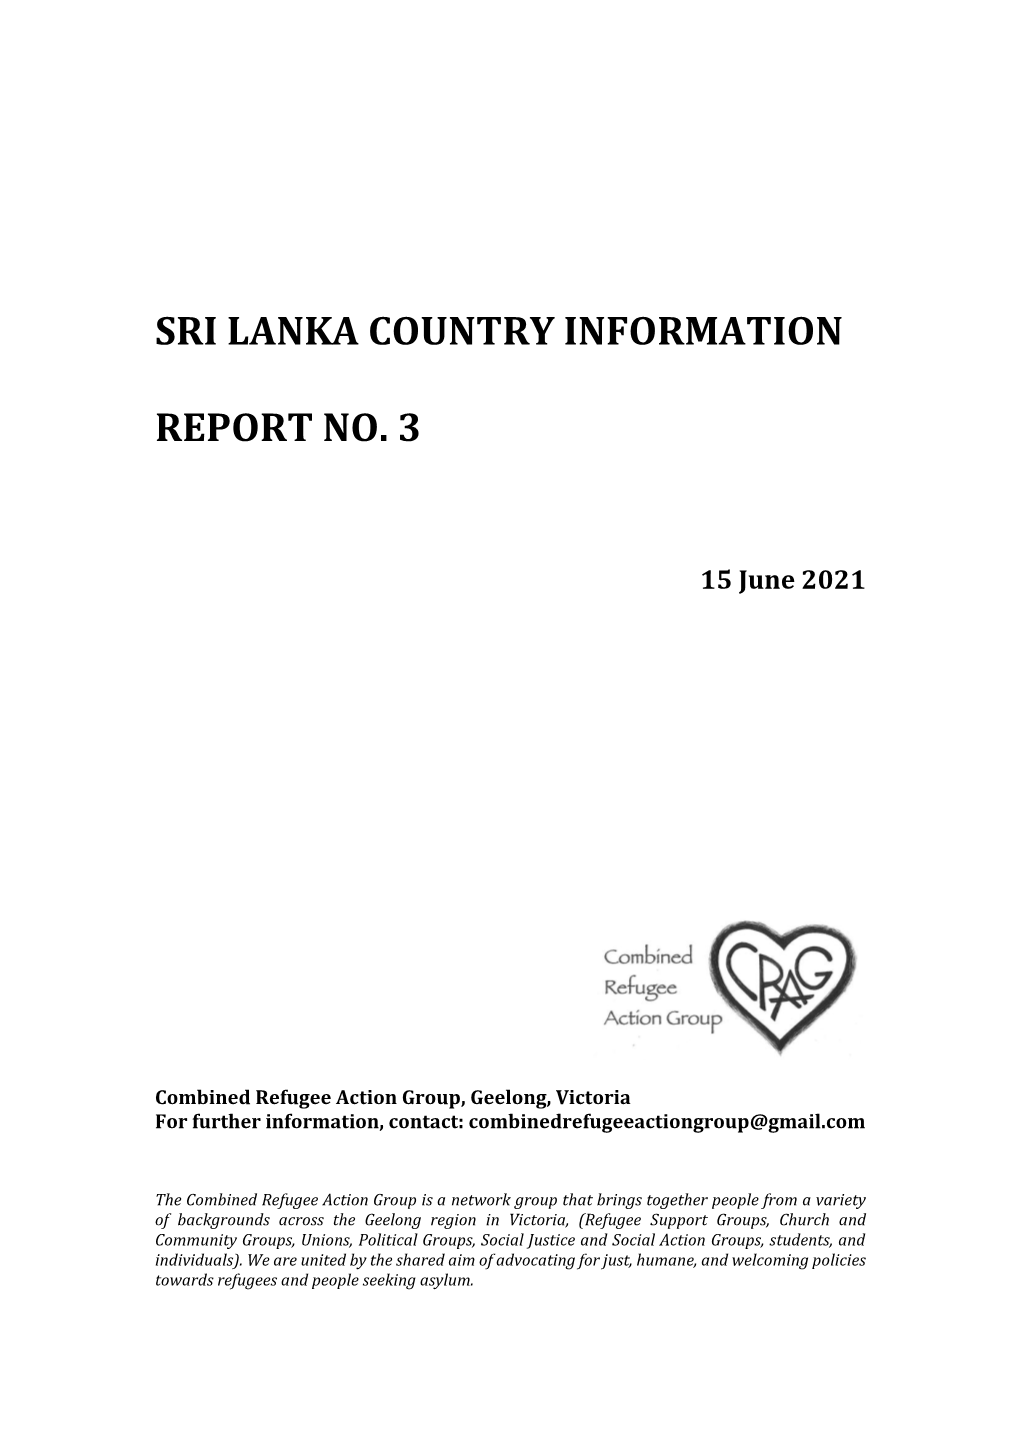 Sri Lanka Country Information Report No. 3